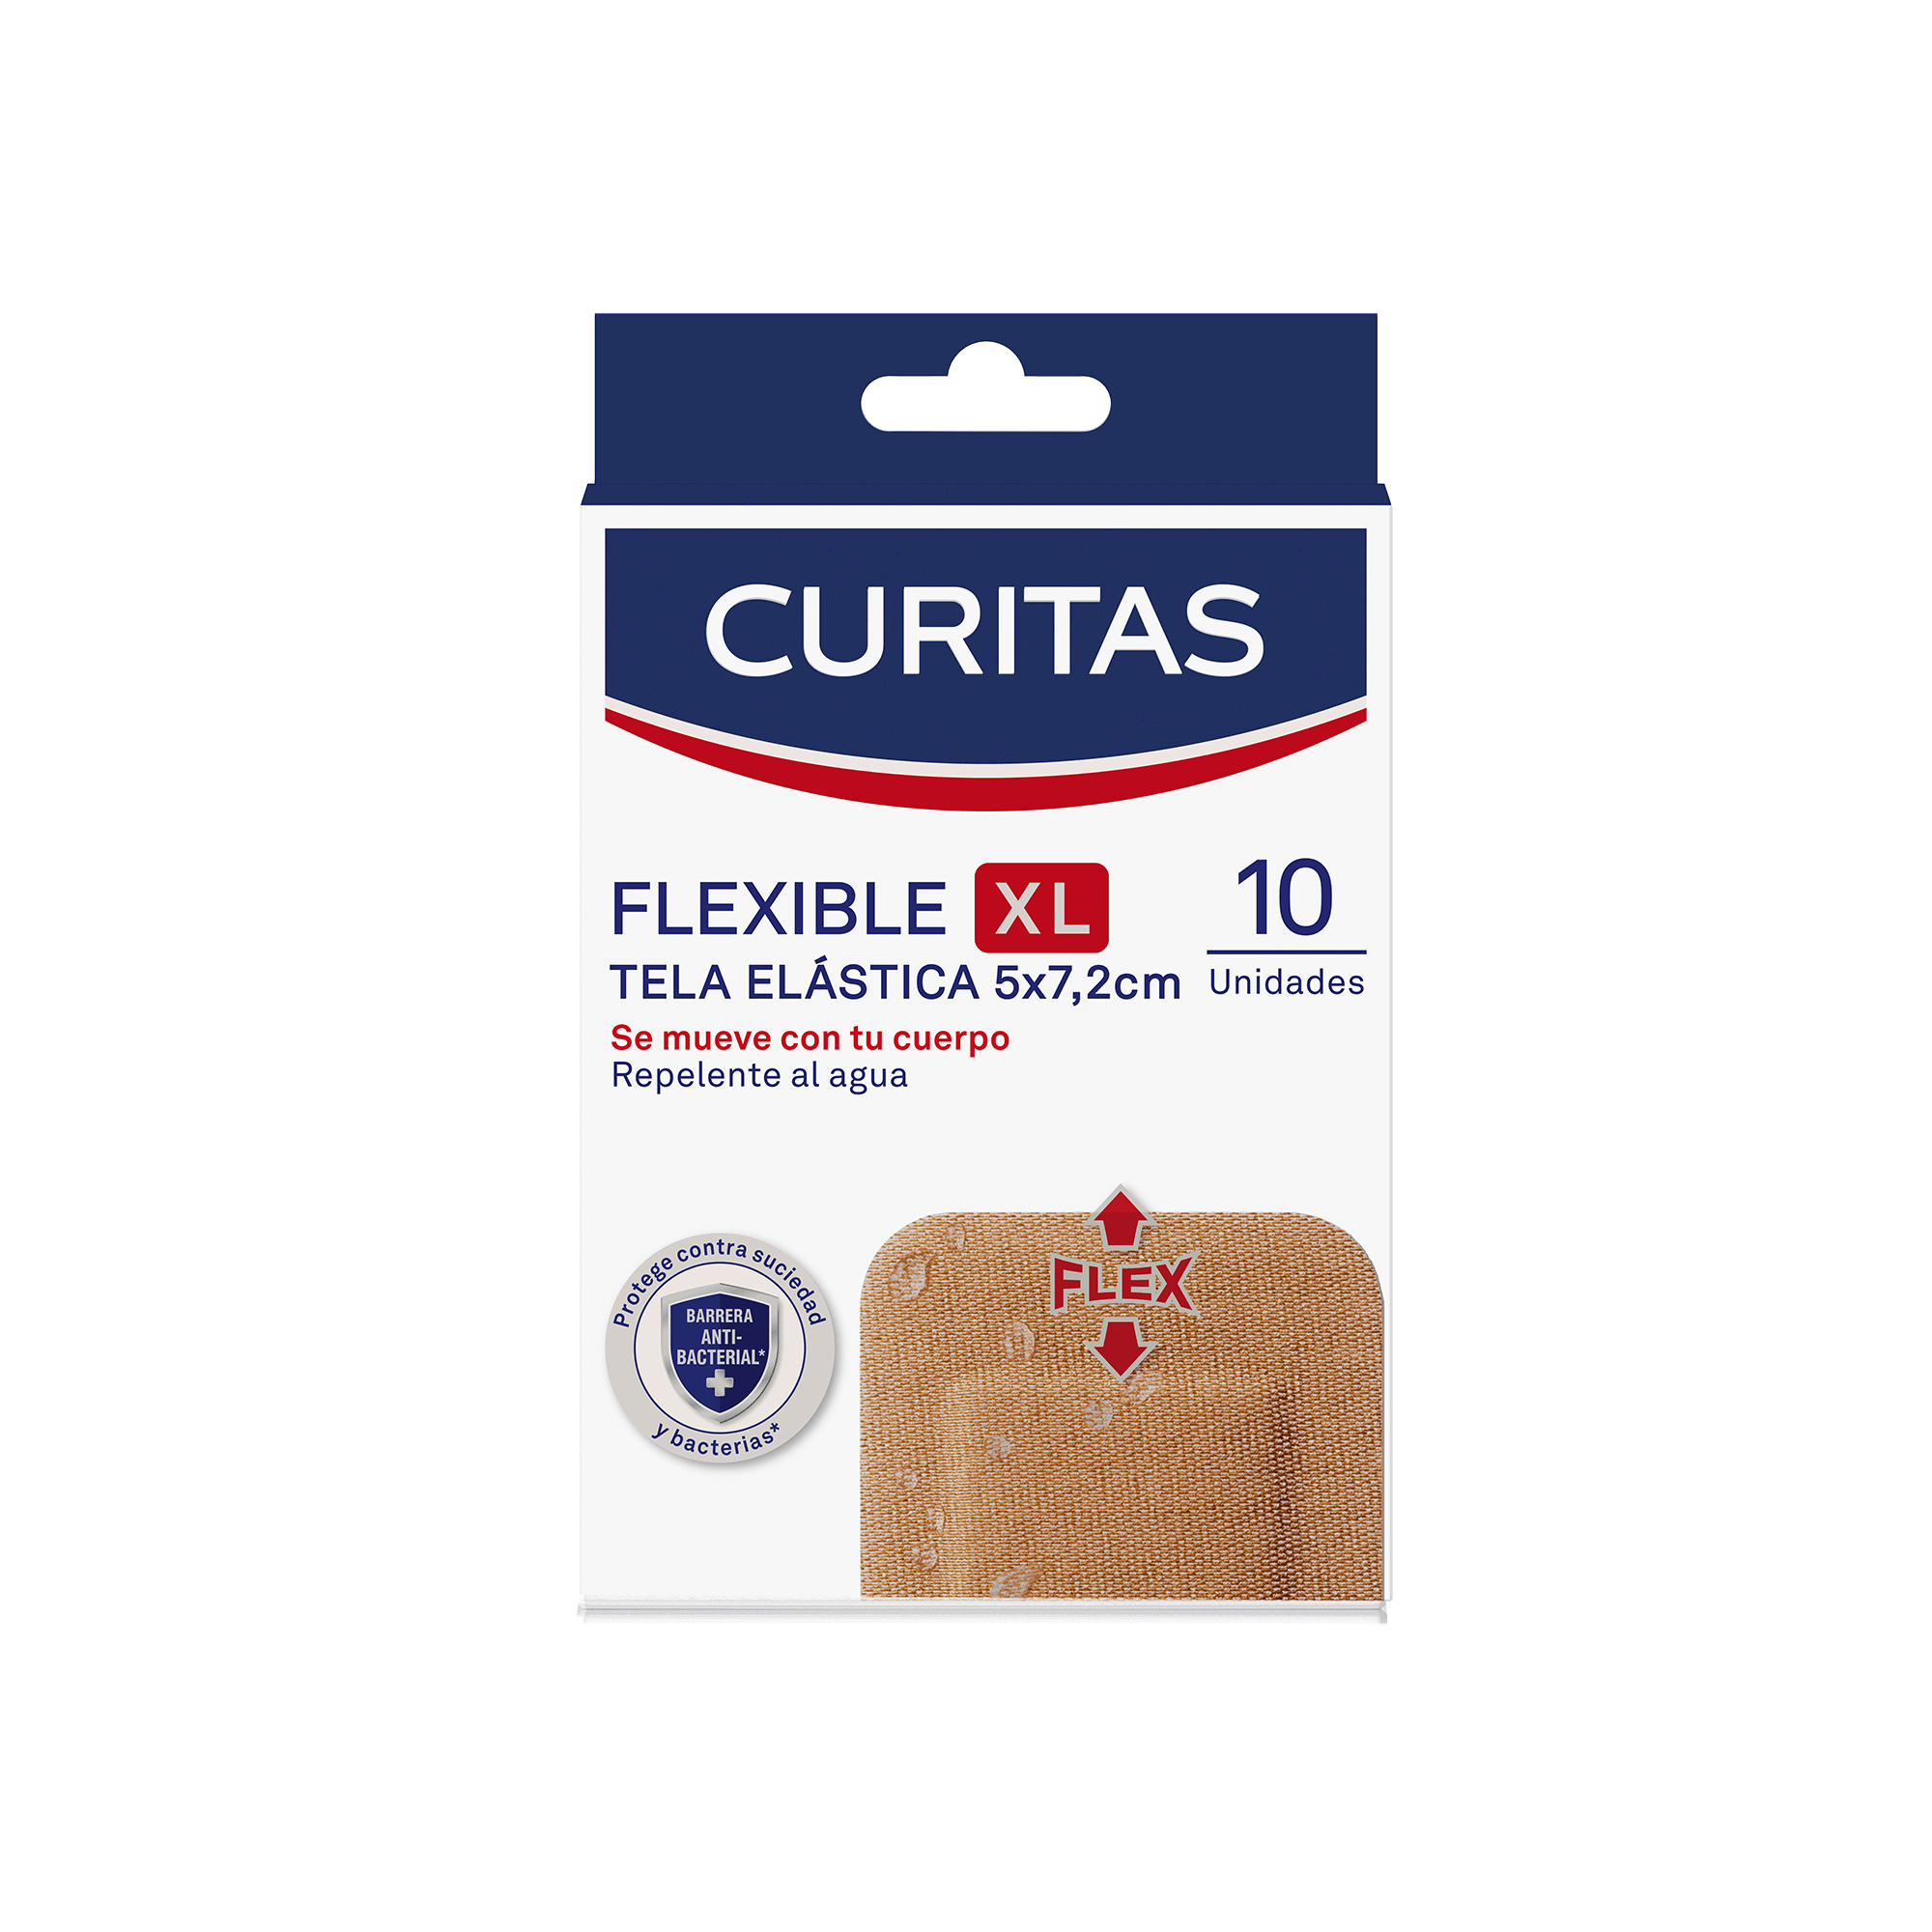 cur-curitas-flexible-XL